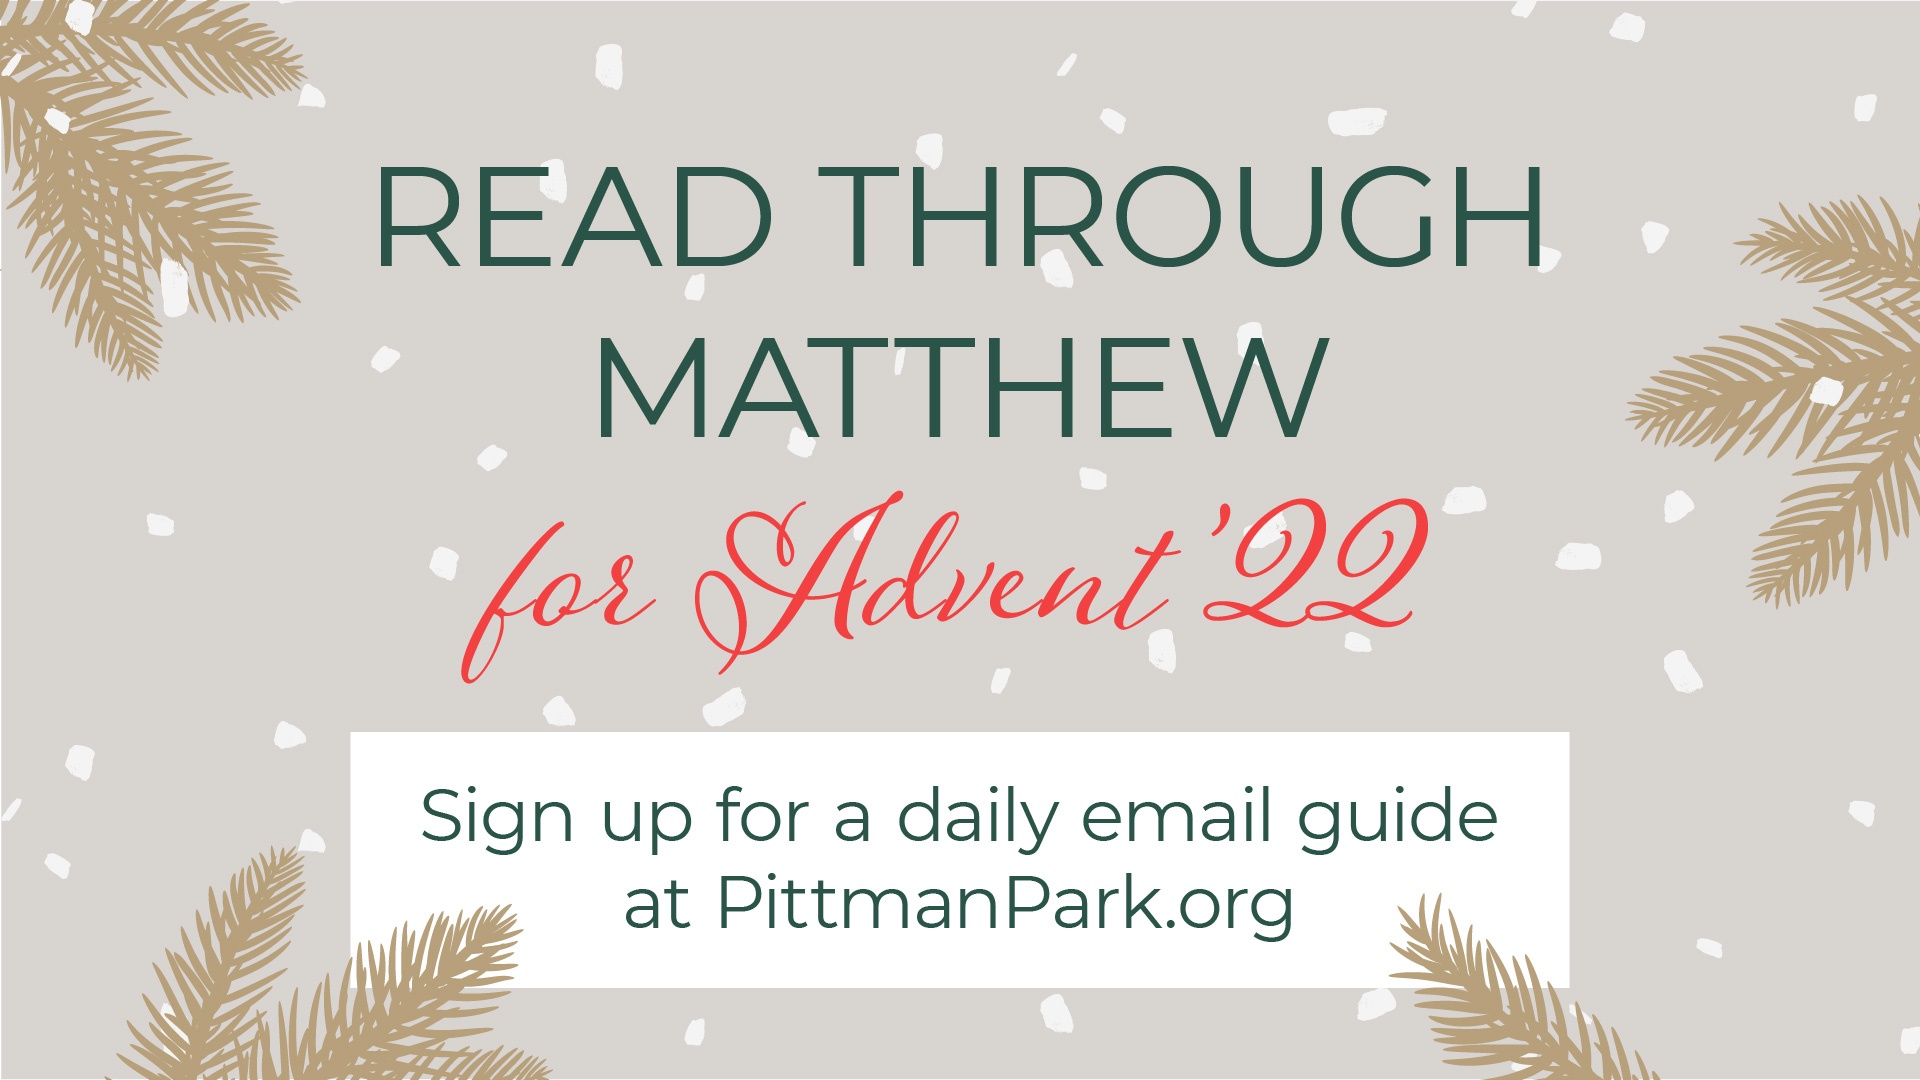 Read through Matthew for Advent ’22